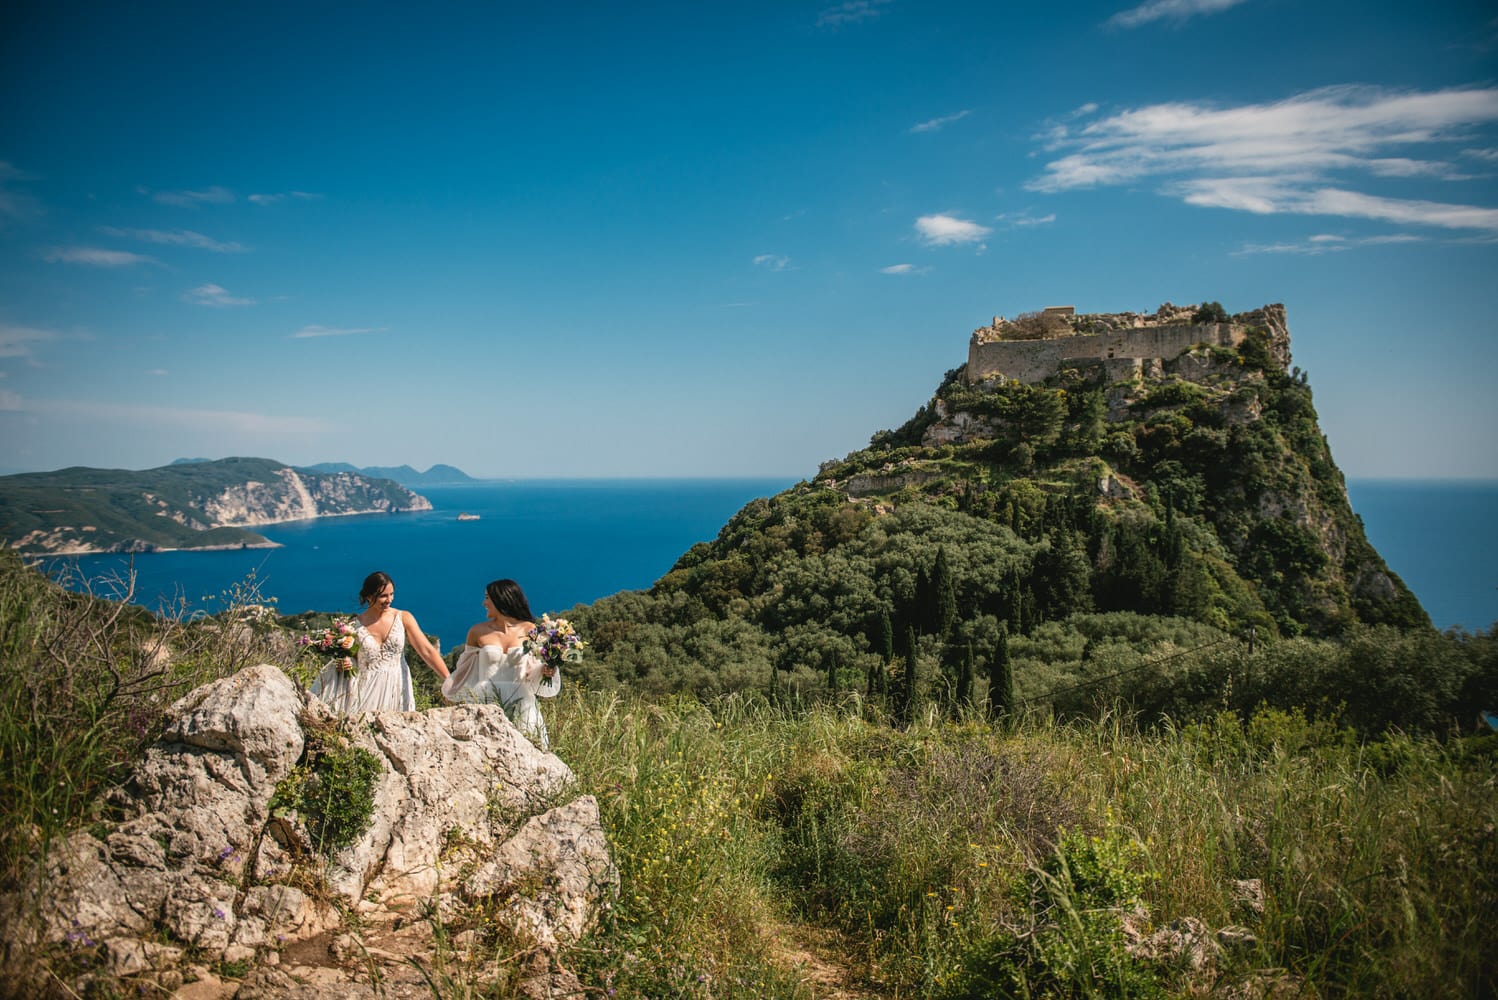 Brides strolling on rocky terrain by the castle, a beautiful Corfu elopement backdrop.